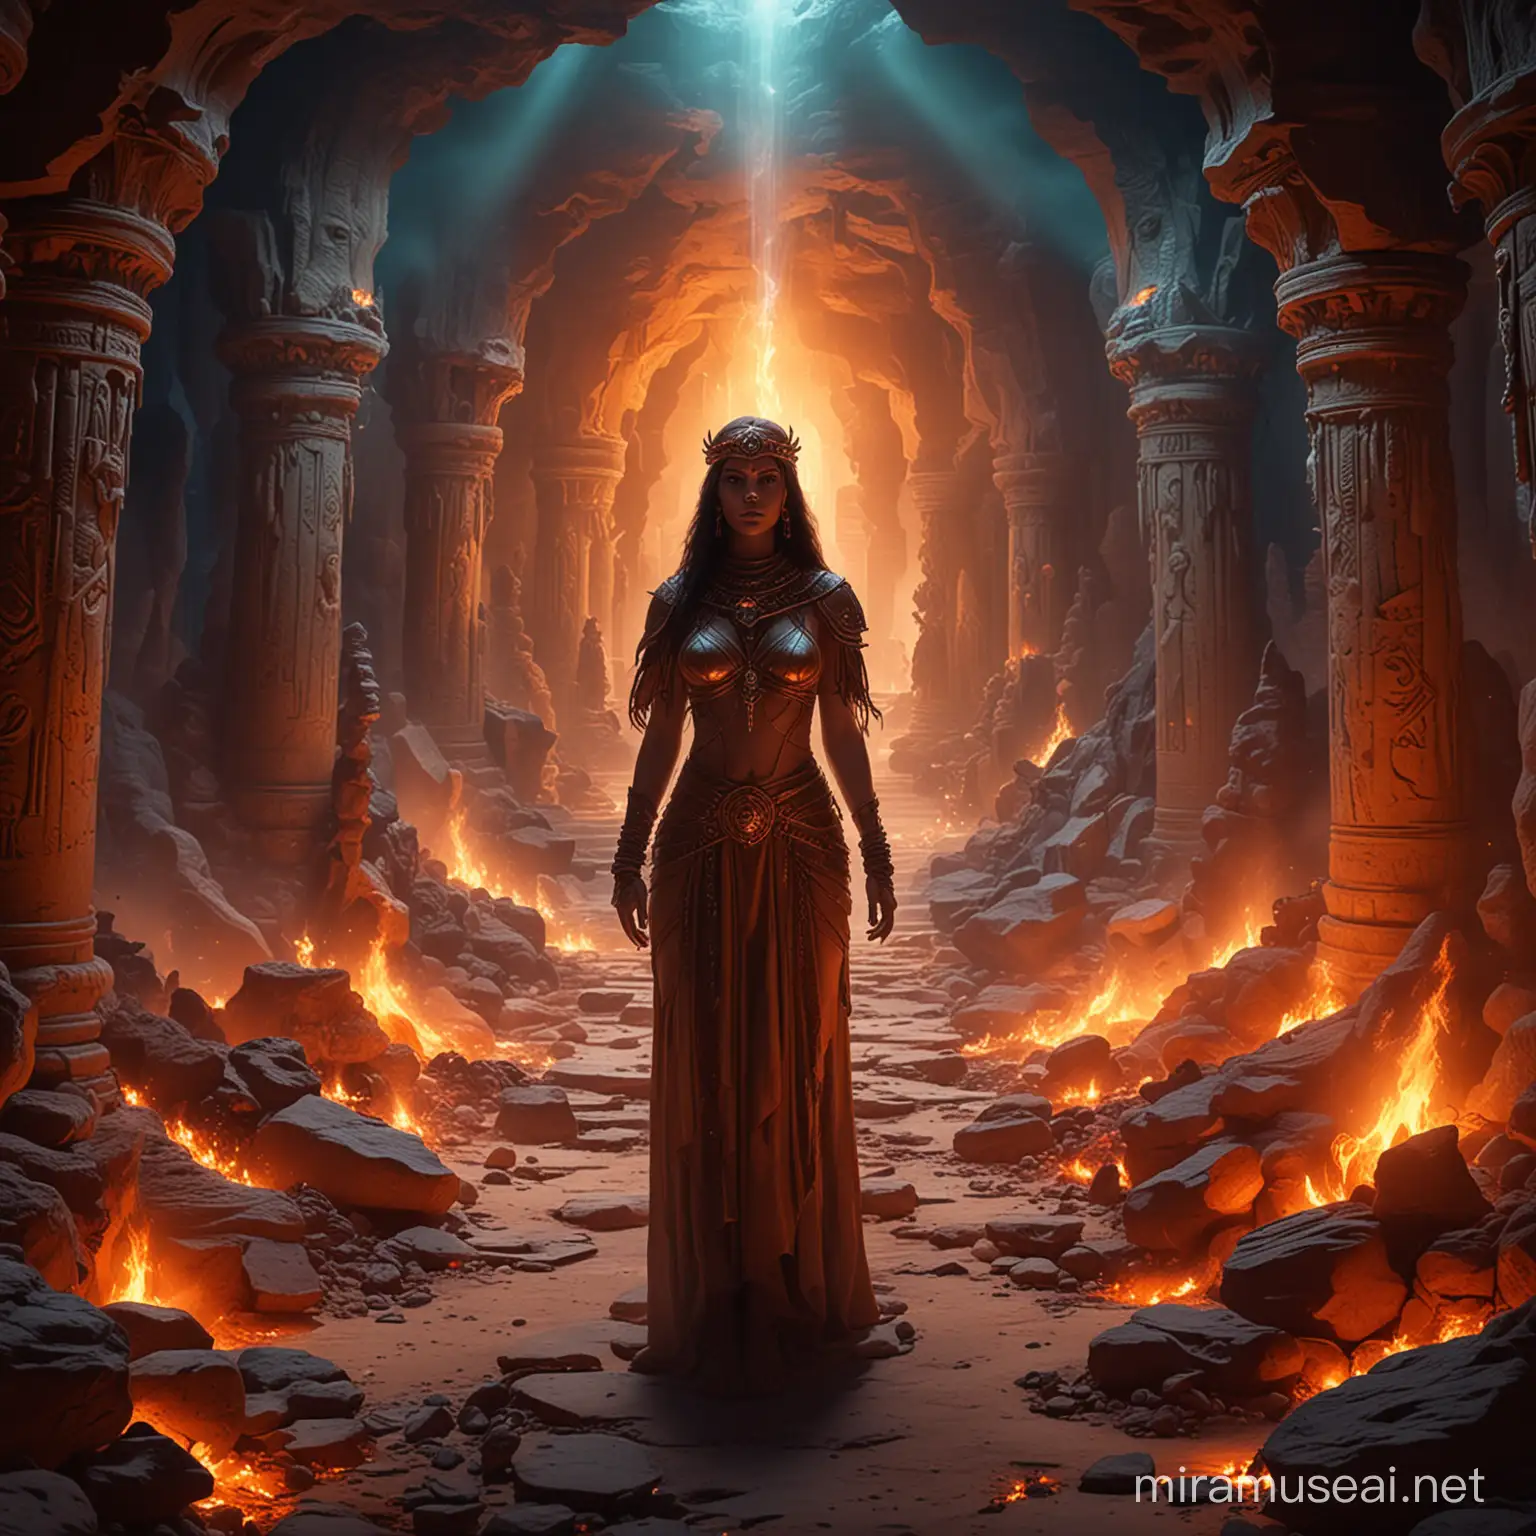 Prophetess Summoning Mystical Realms Amidst Hellfire in Dark Oasis Cavern Temple